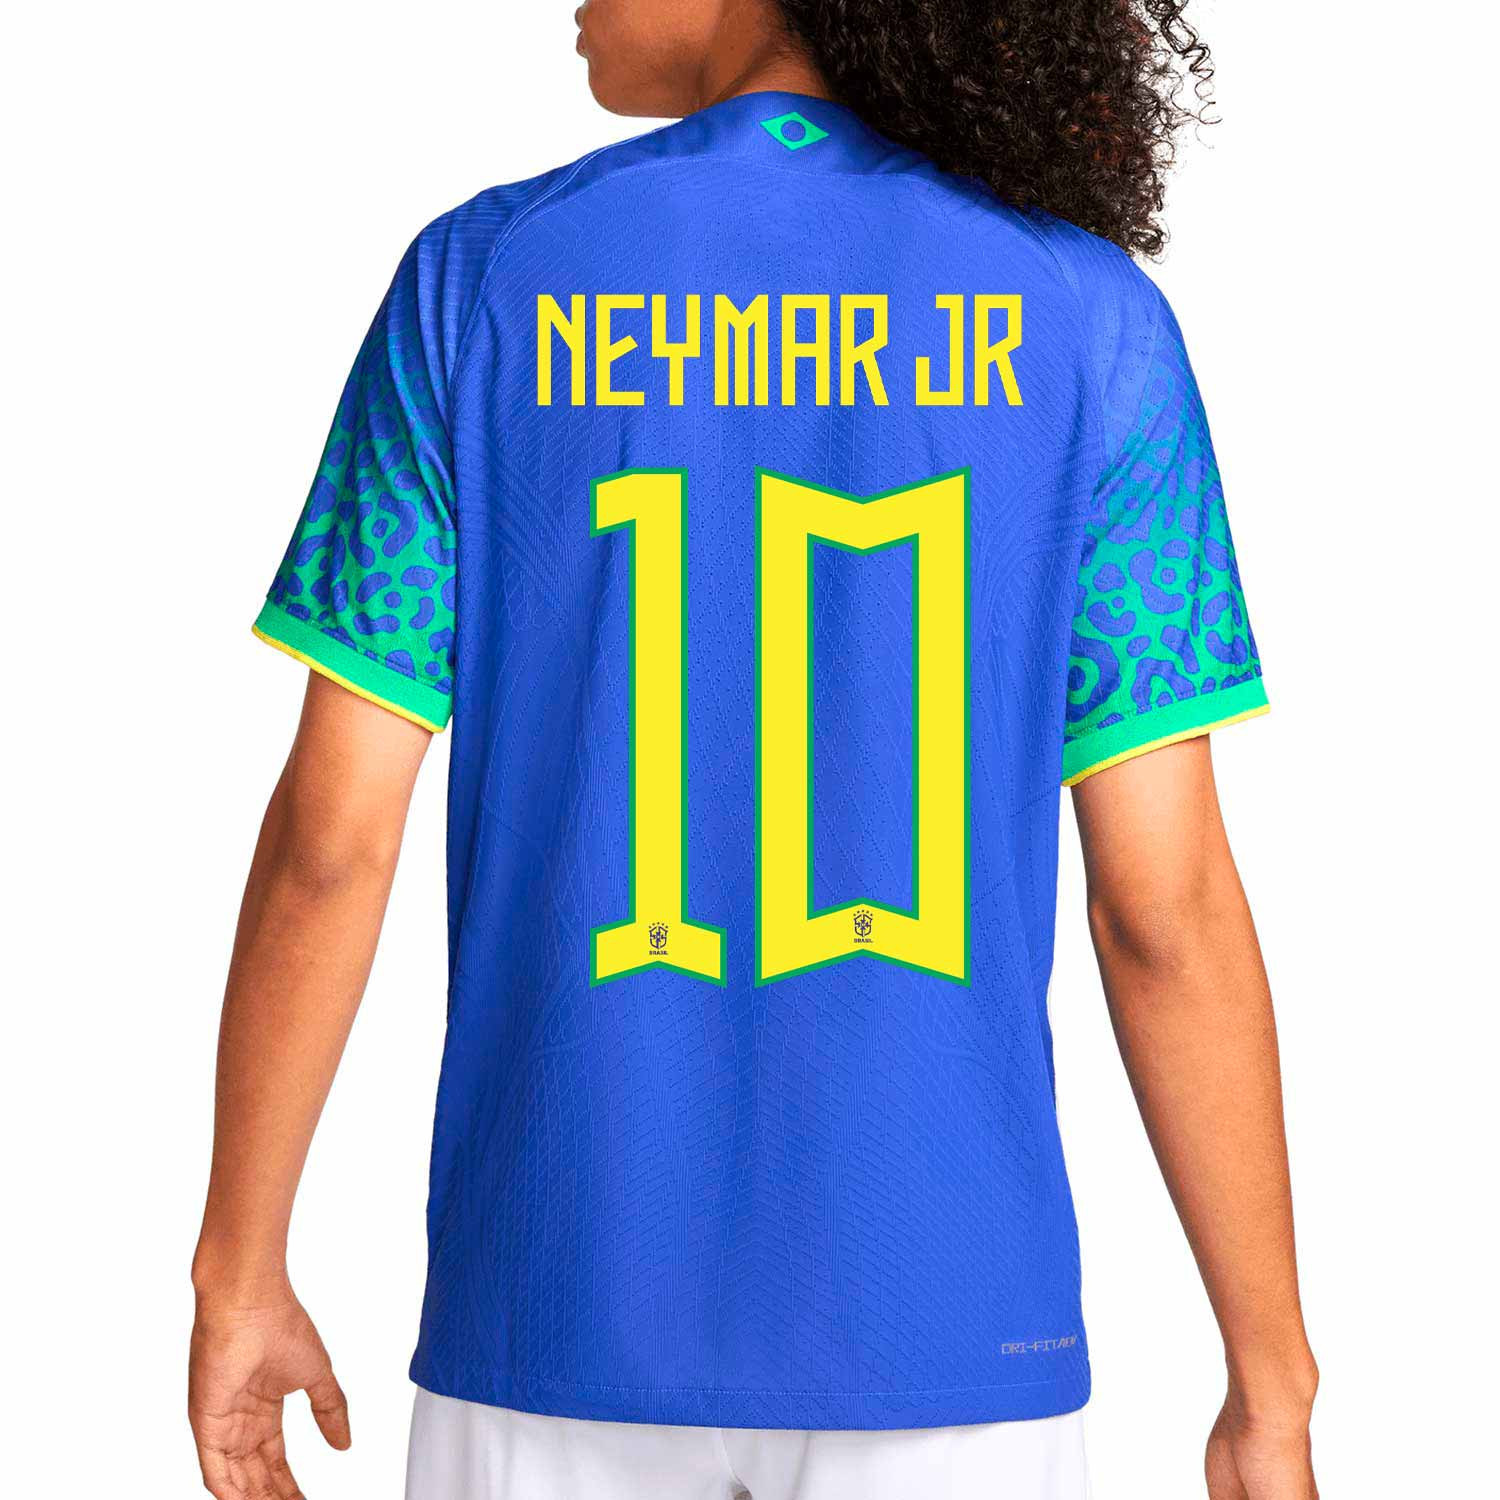 Neymar camiseta